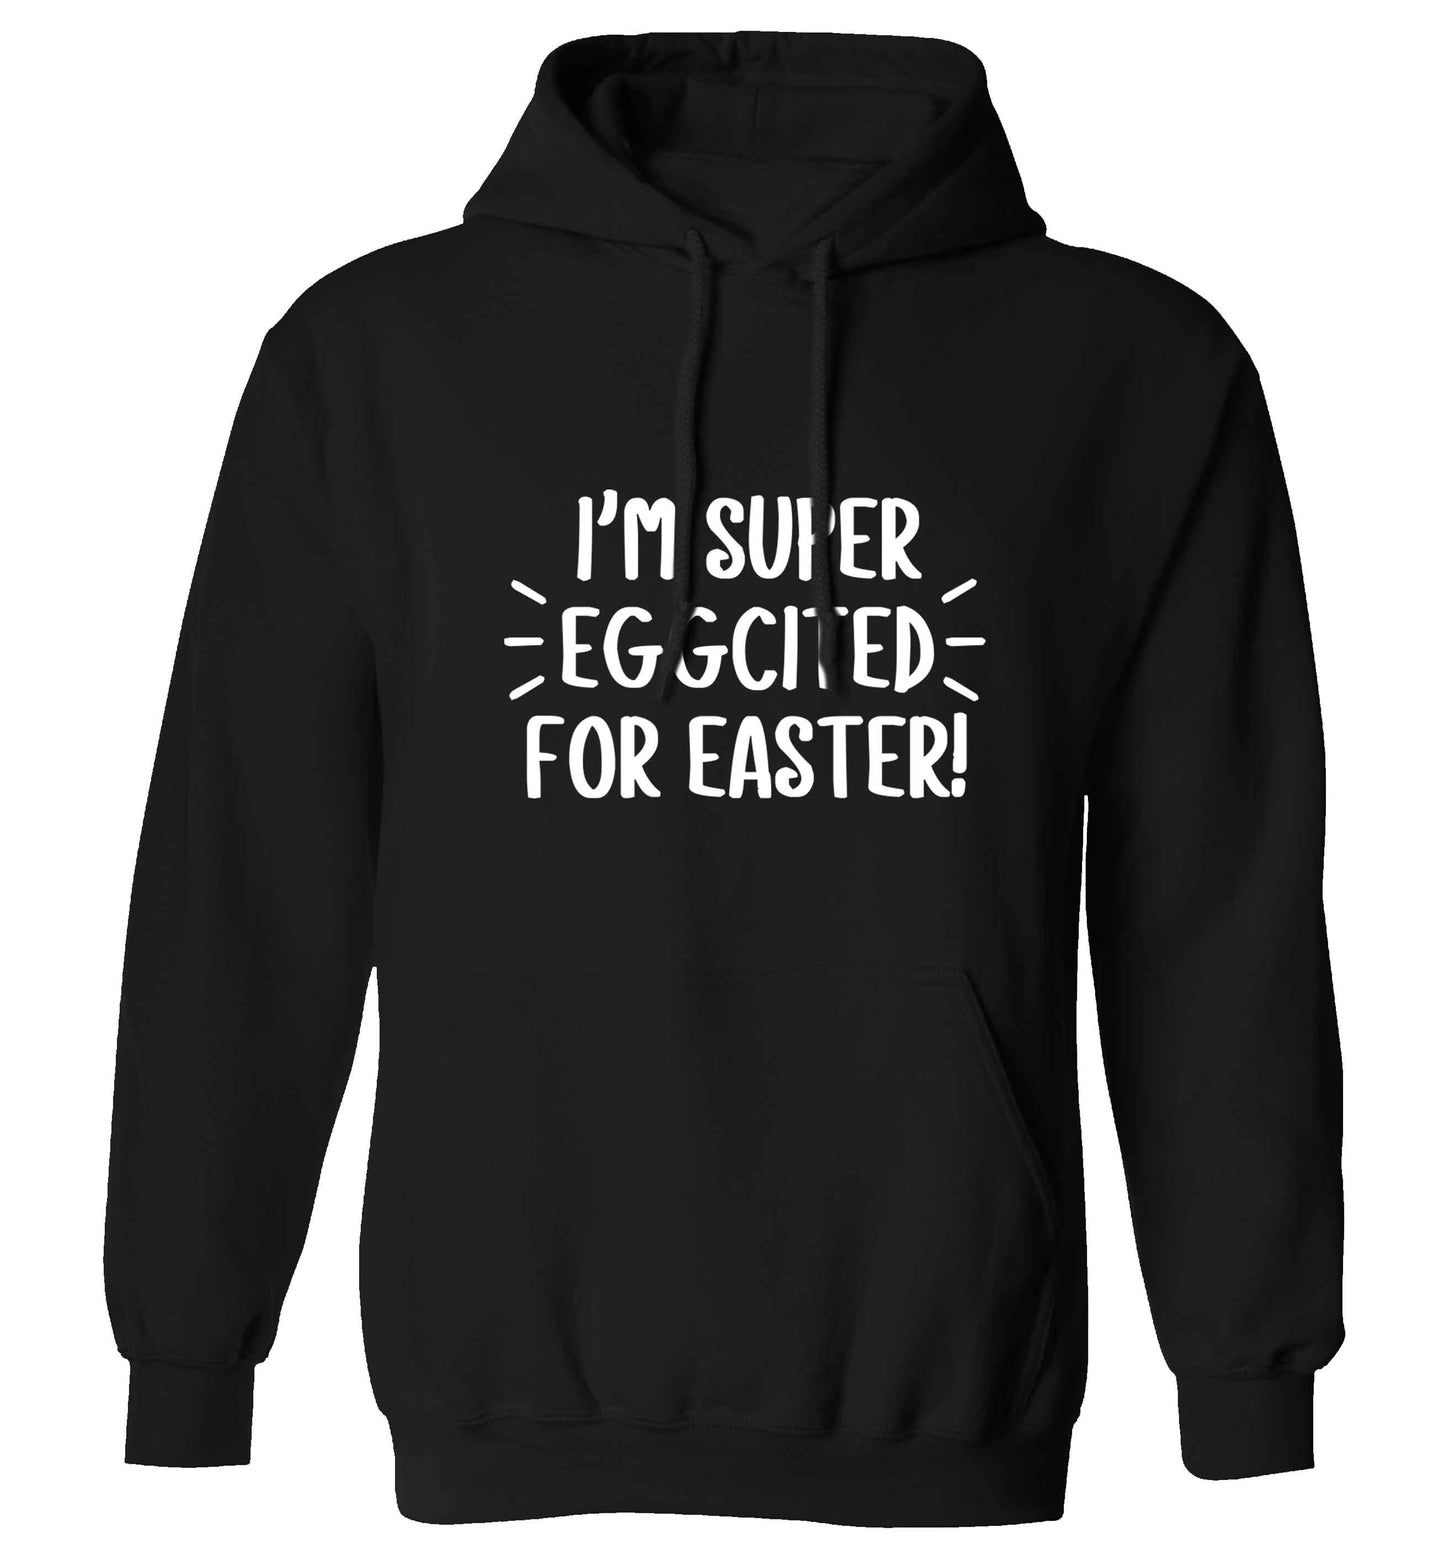 I'm super eggcited for Easter adults unisex black hoodie 2XL